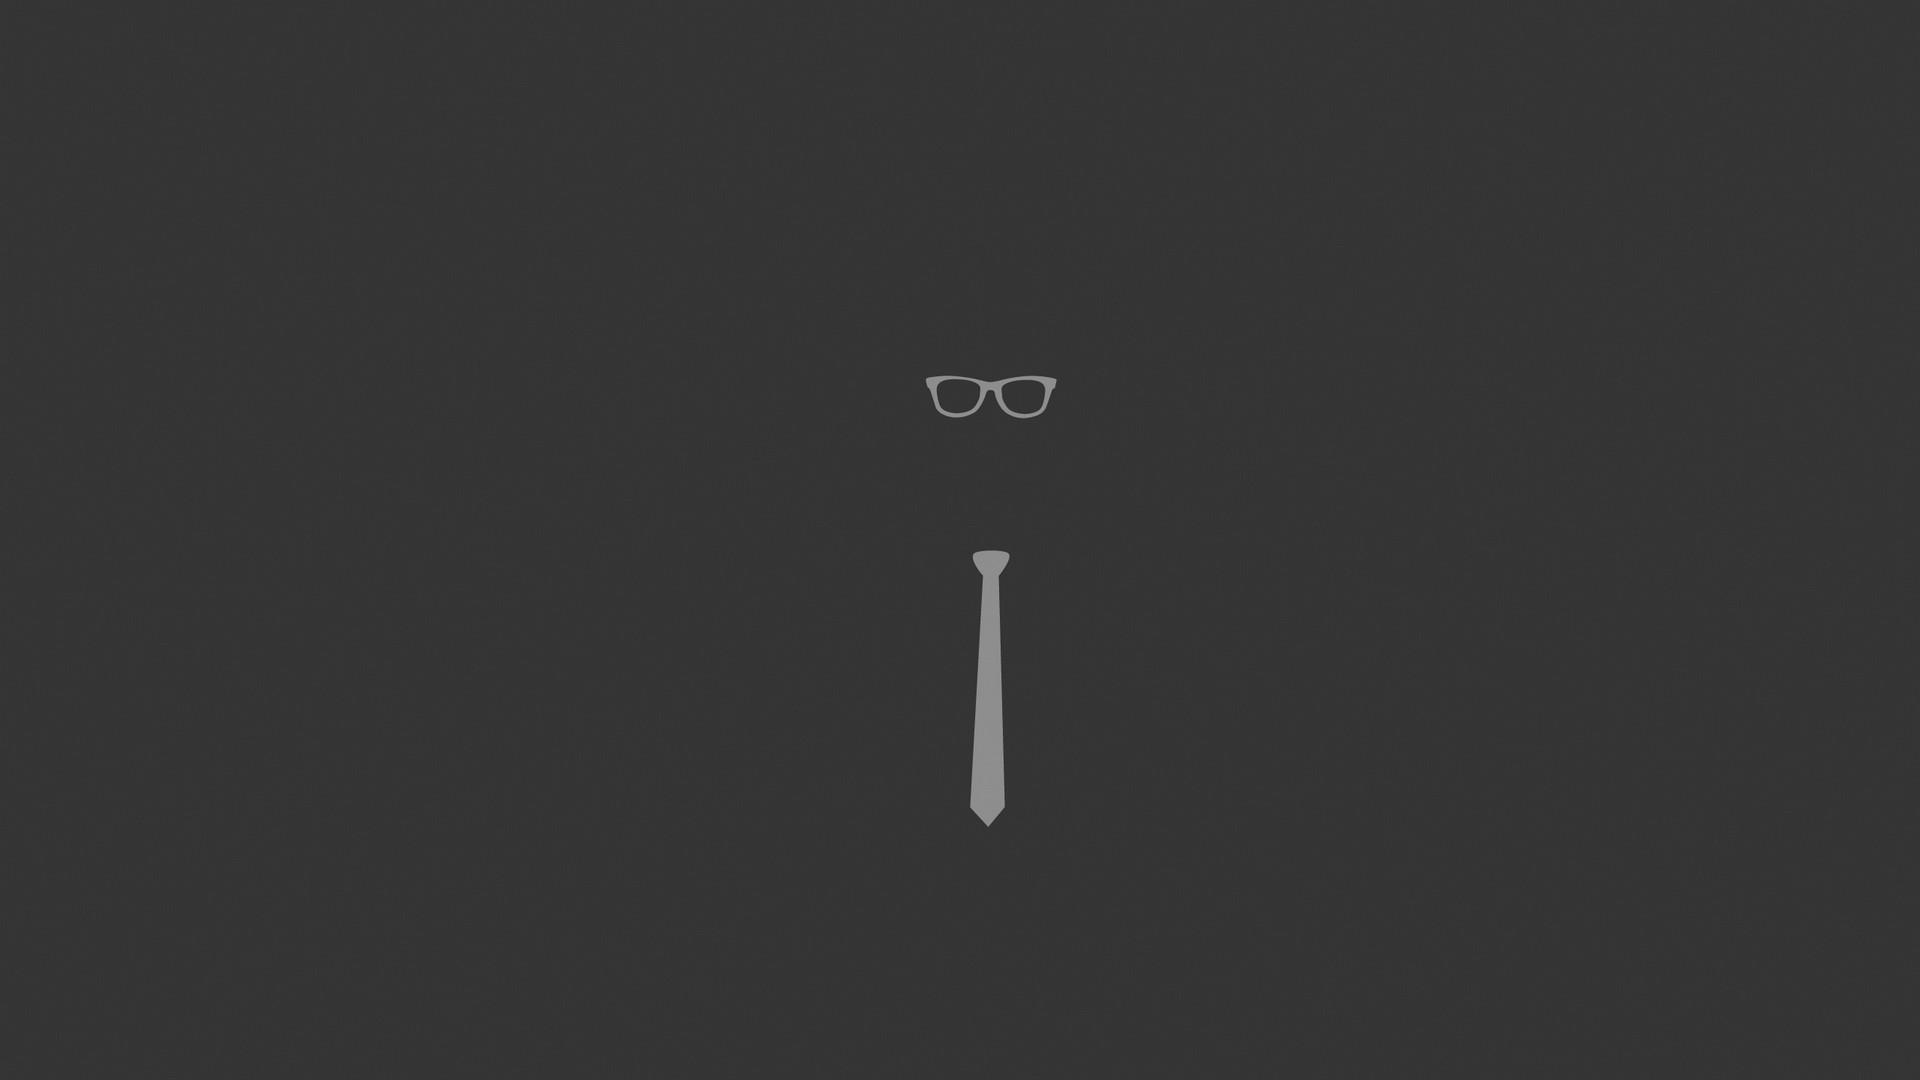 Glasses and Tie Minimal HD Wallpaper